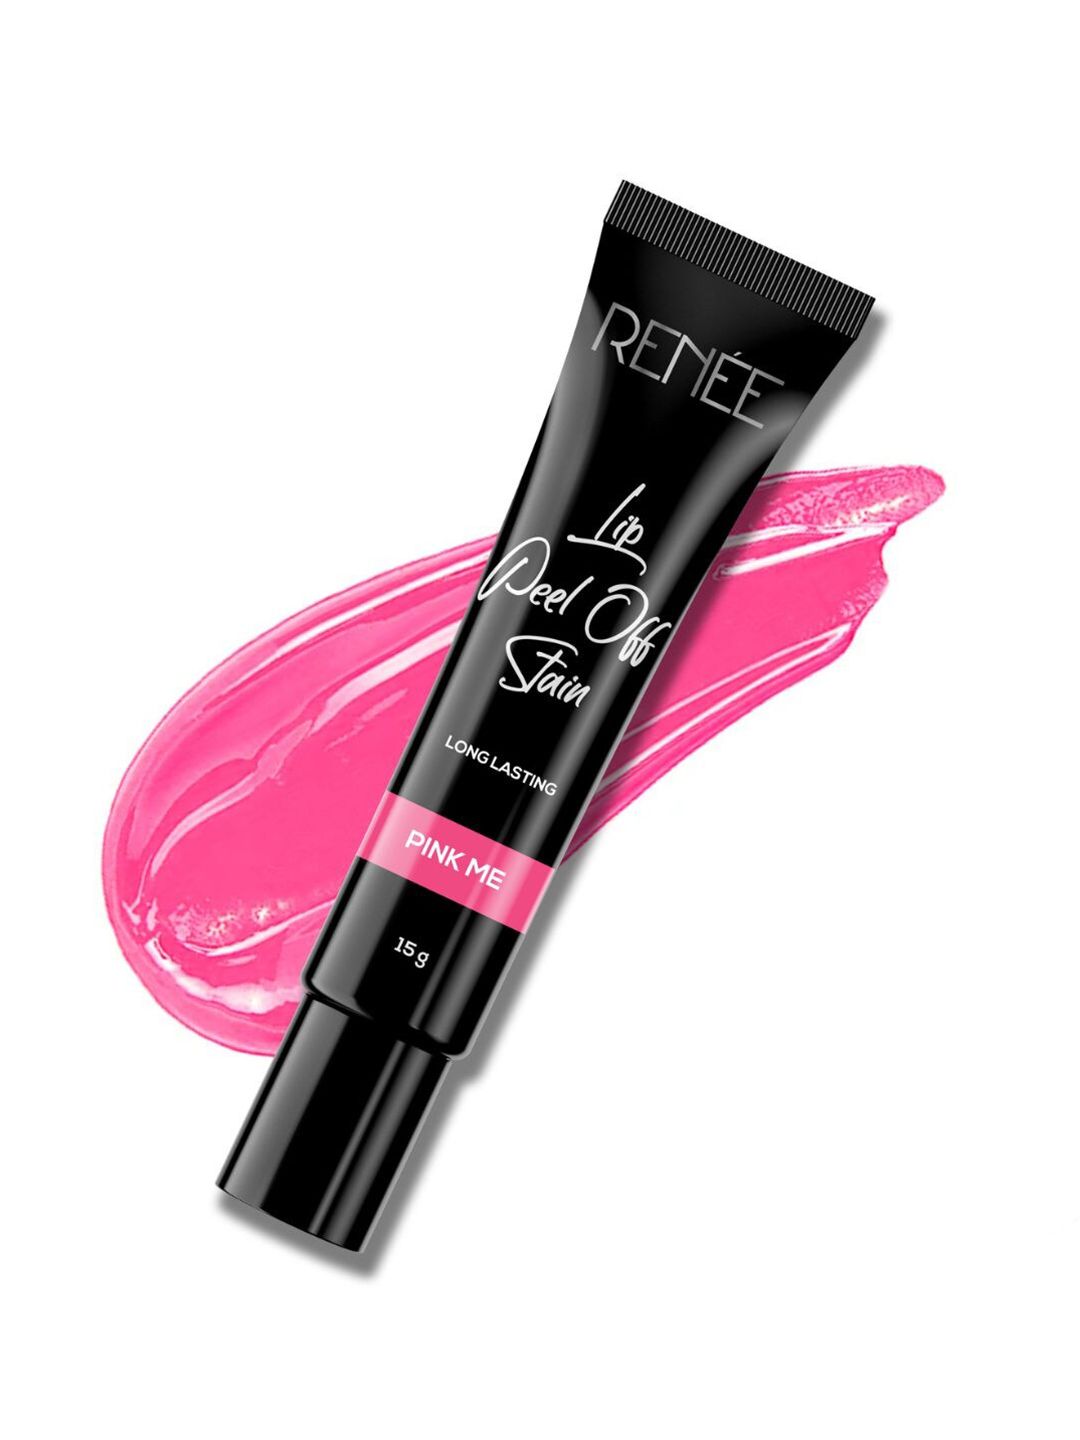 RENEE Lip Peel Off Stain Lipstick - Pink Me 15g Price in India